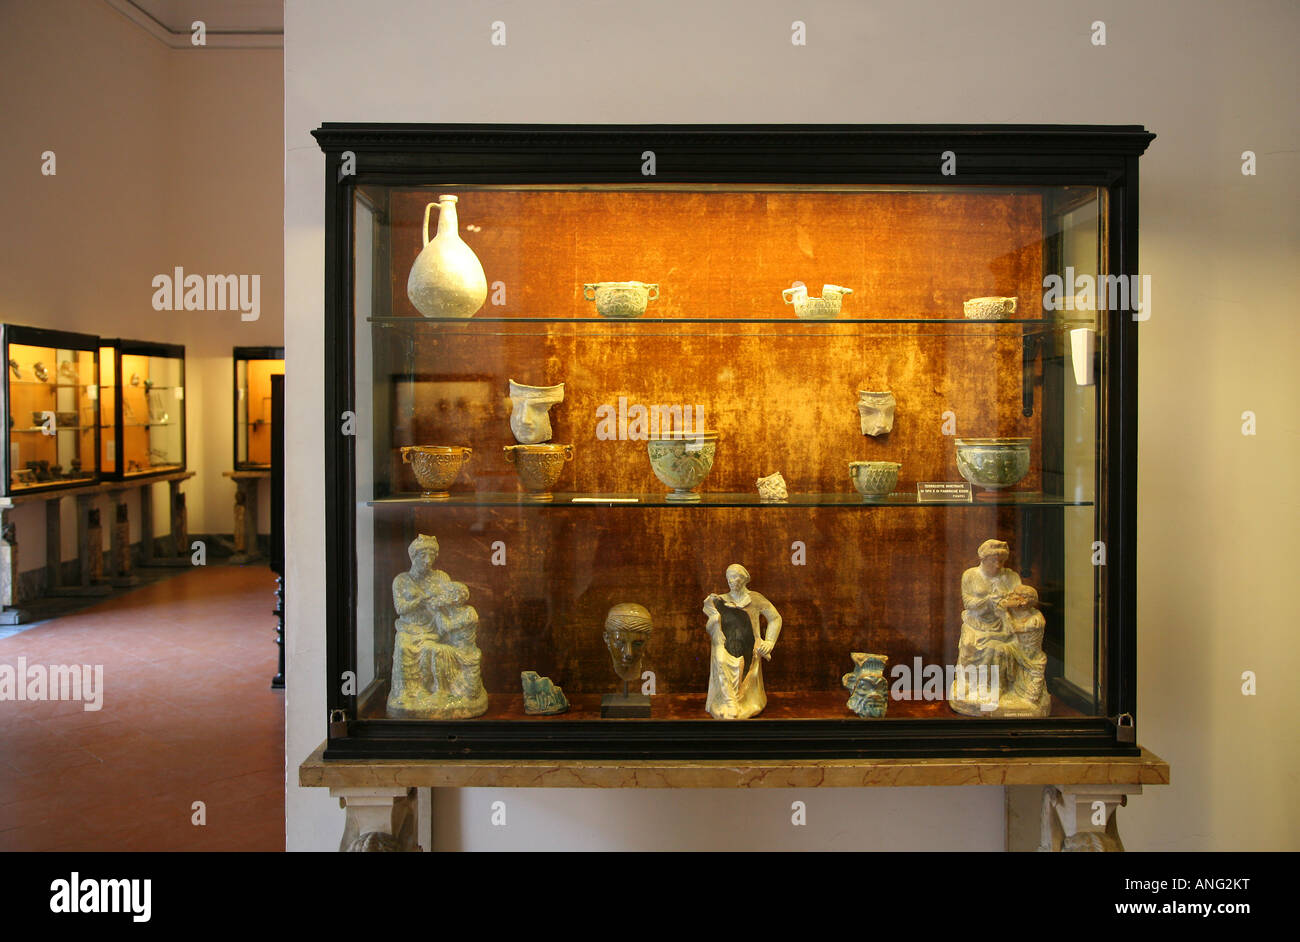 Das nationale archäologische Museum von Neapel in Neapel Italien Stockfoto